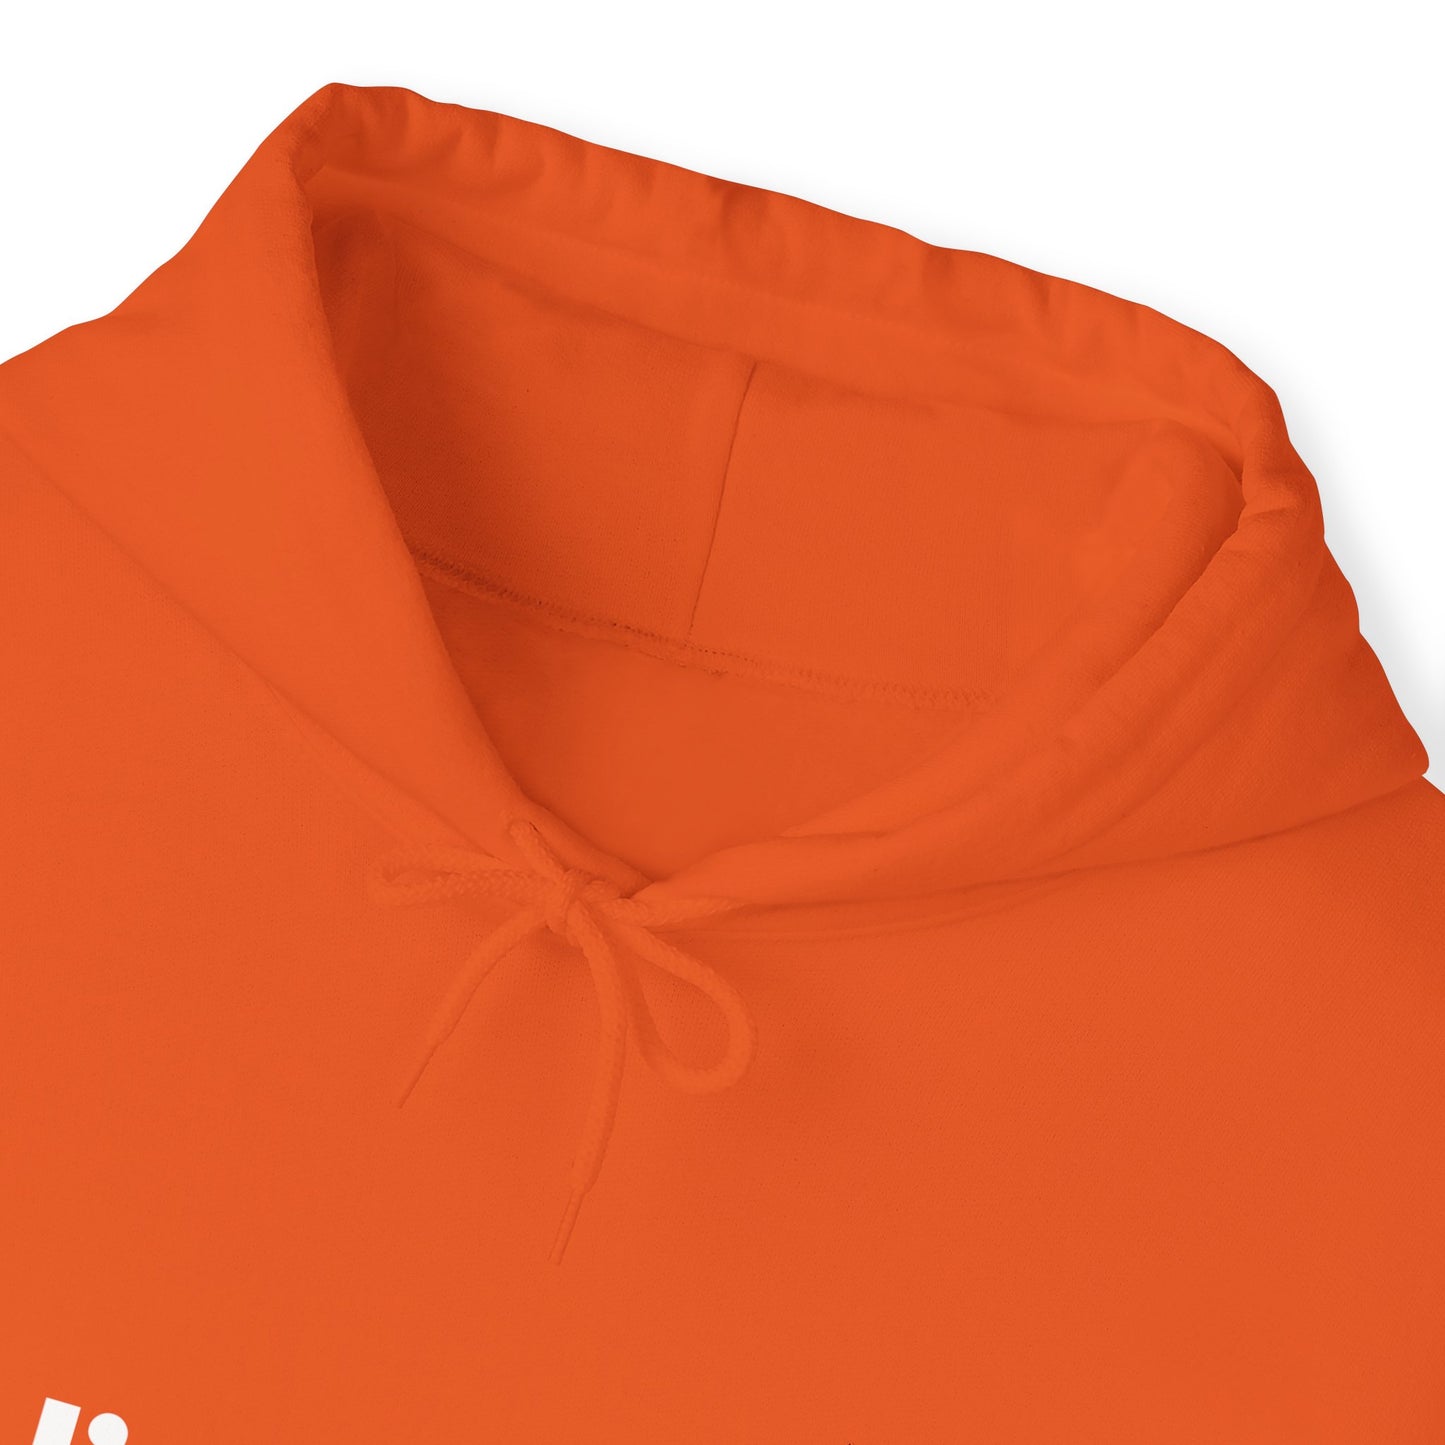 I'm a f**king delight Unisex Heavy Blend™ Hooded Sweatshirt